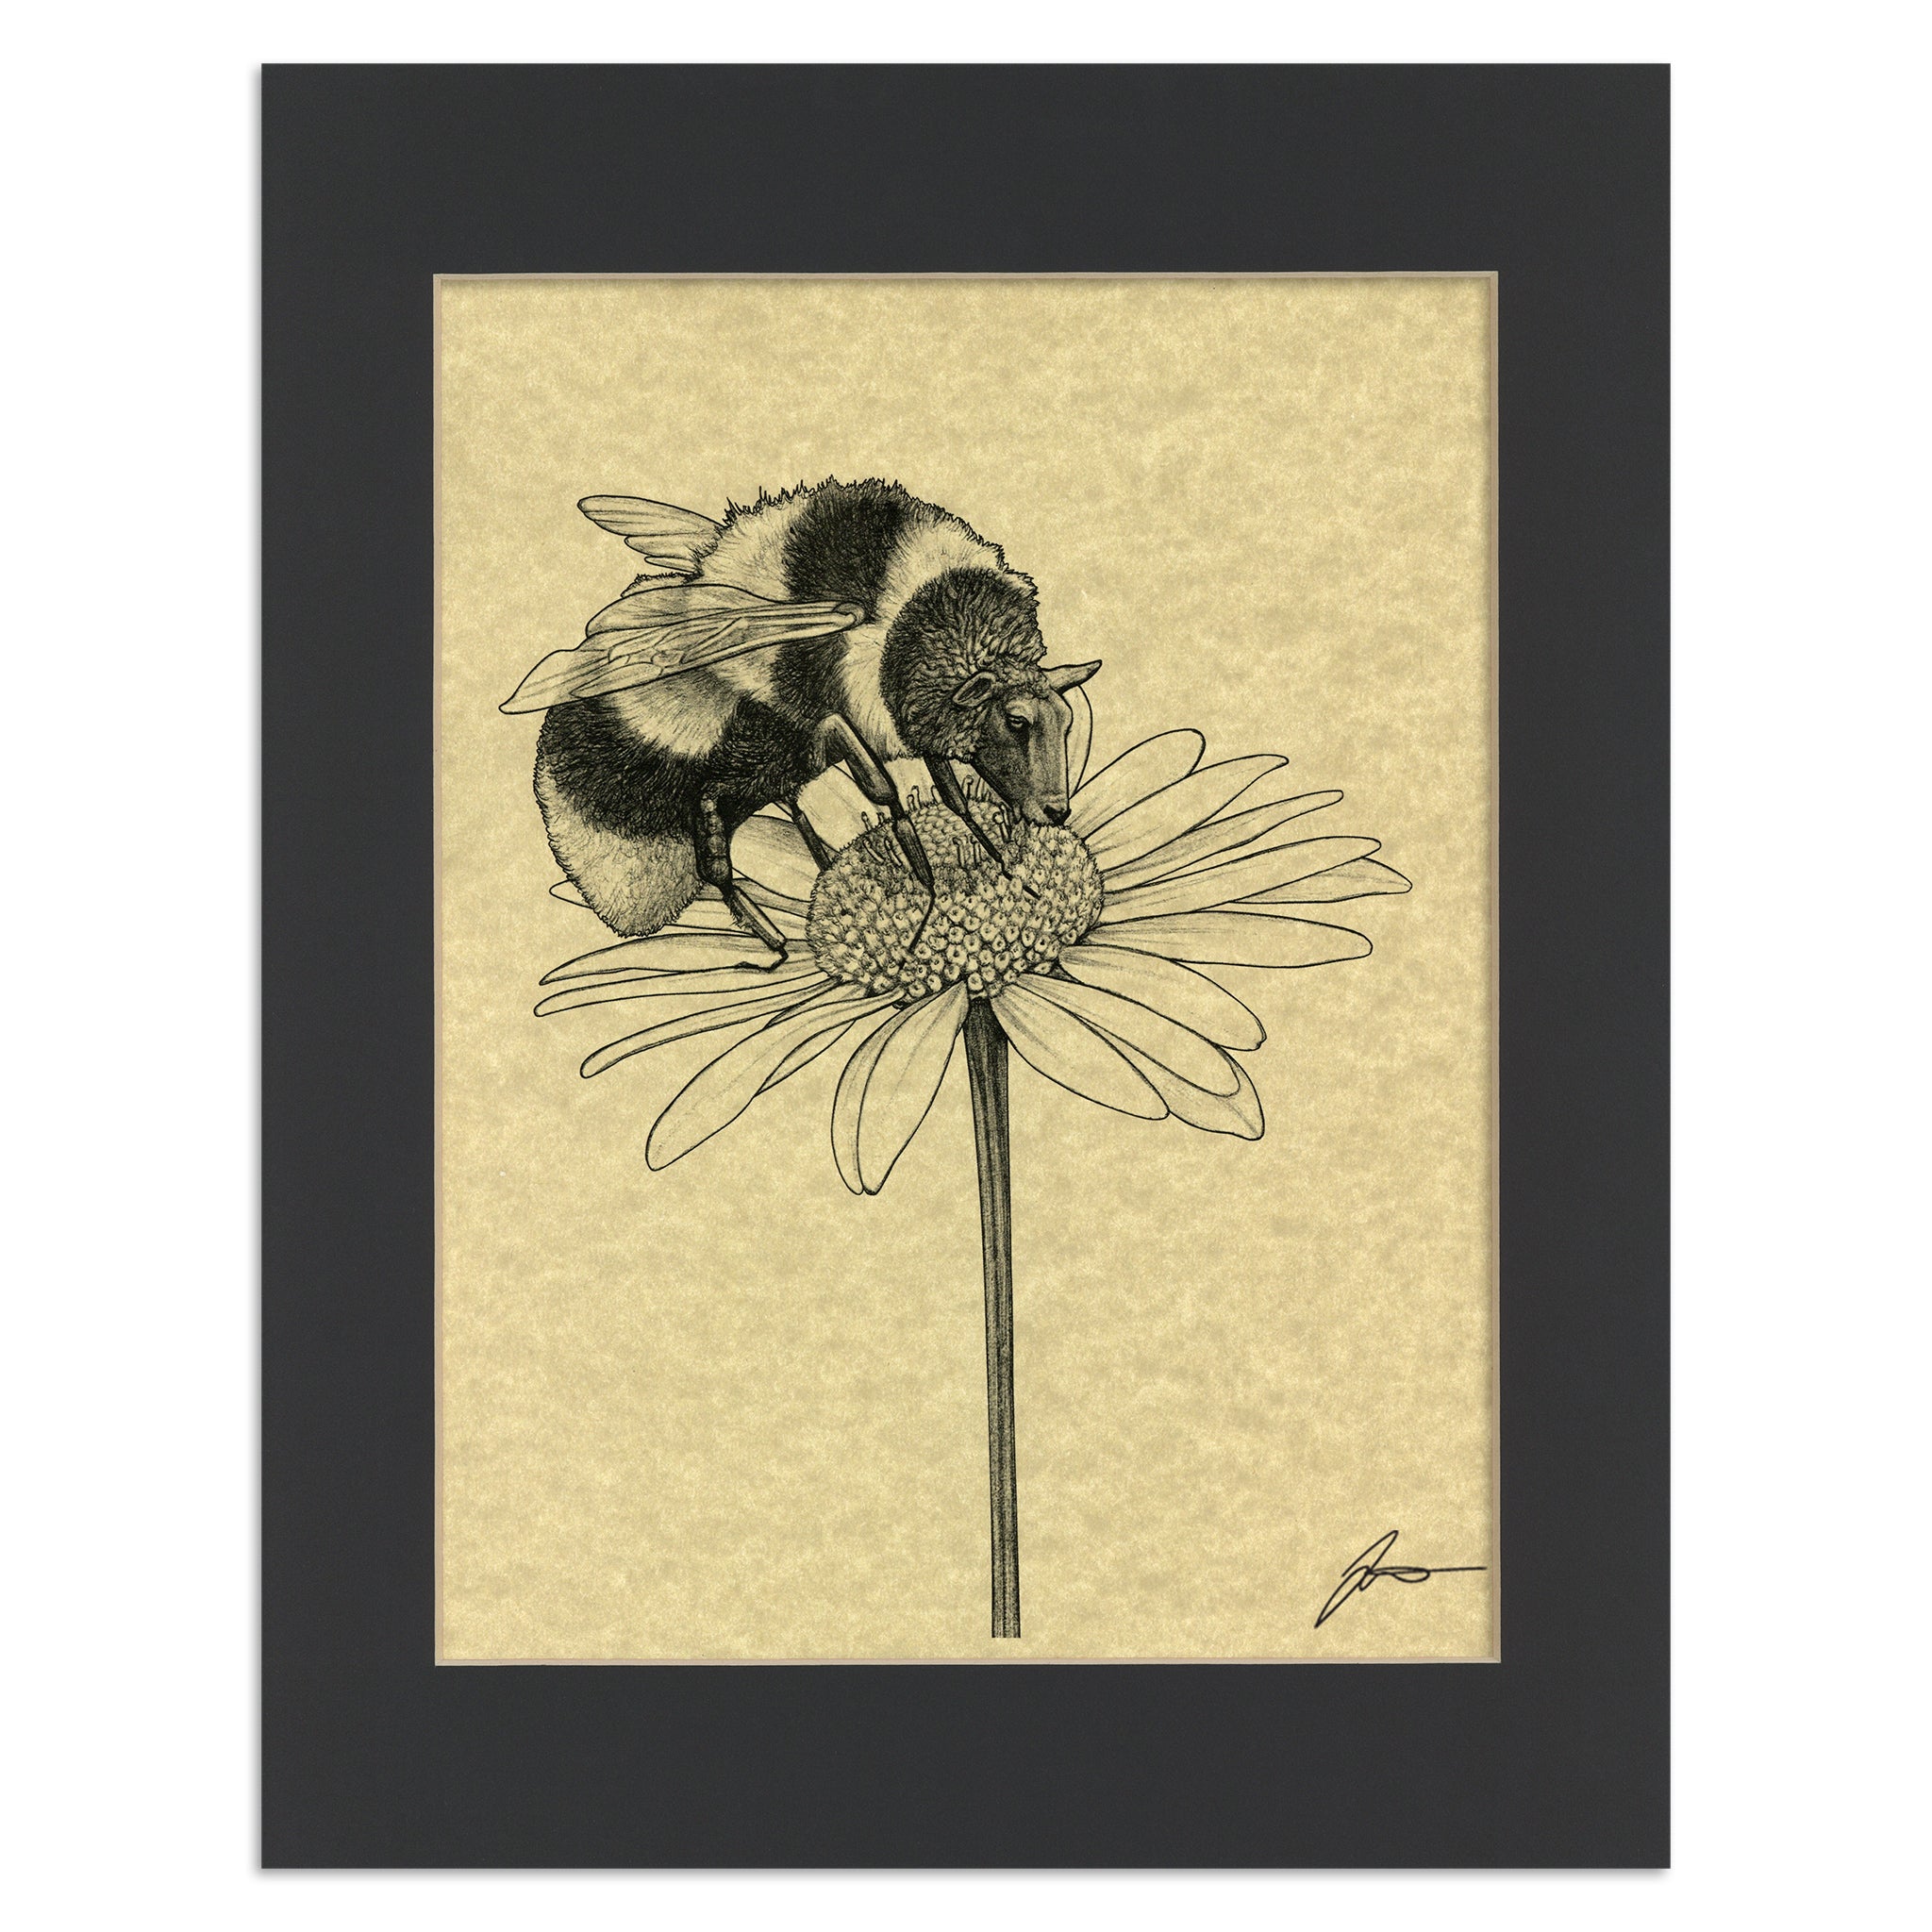 Beep | Bee + Sheep Hybrid Animal | 11x14" Parchment Print